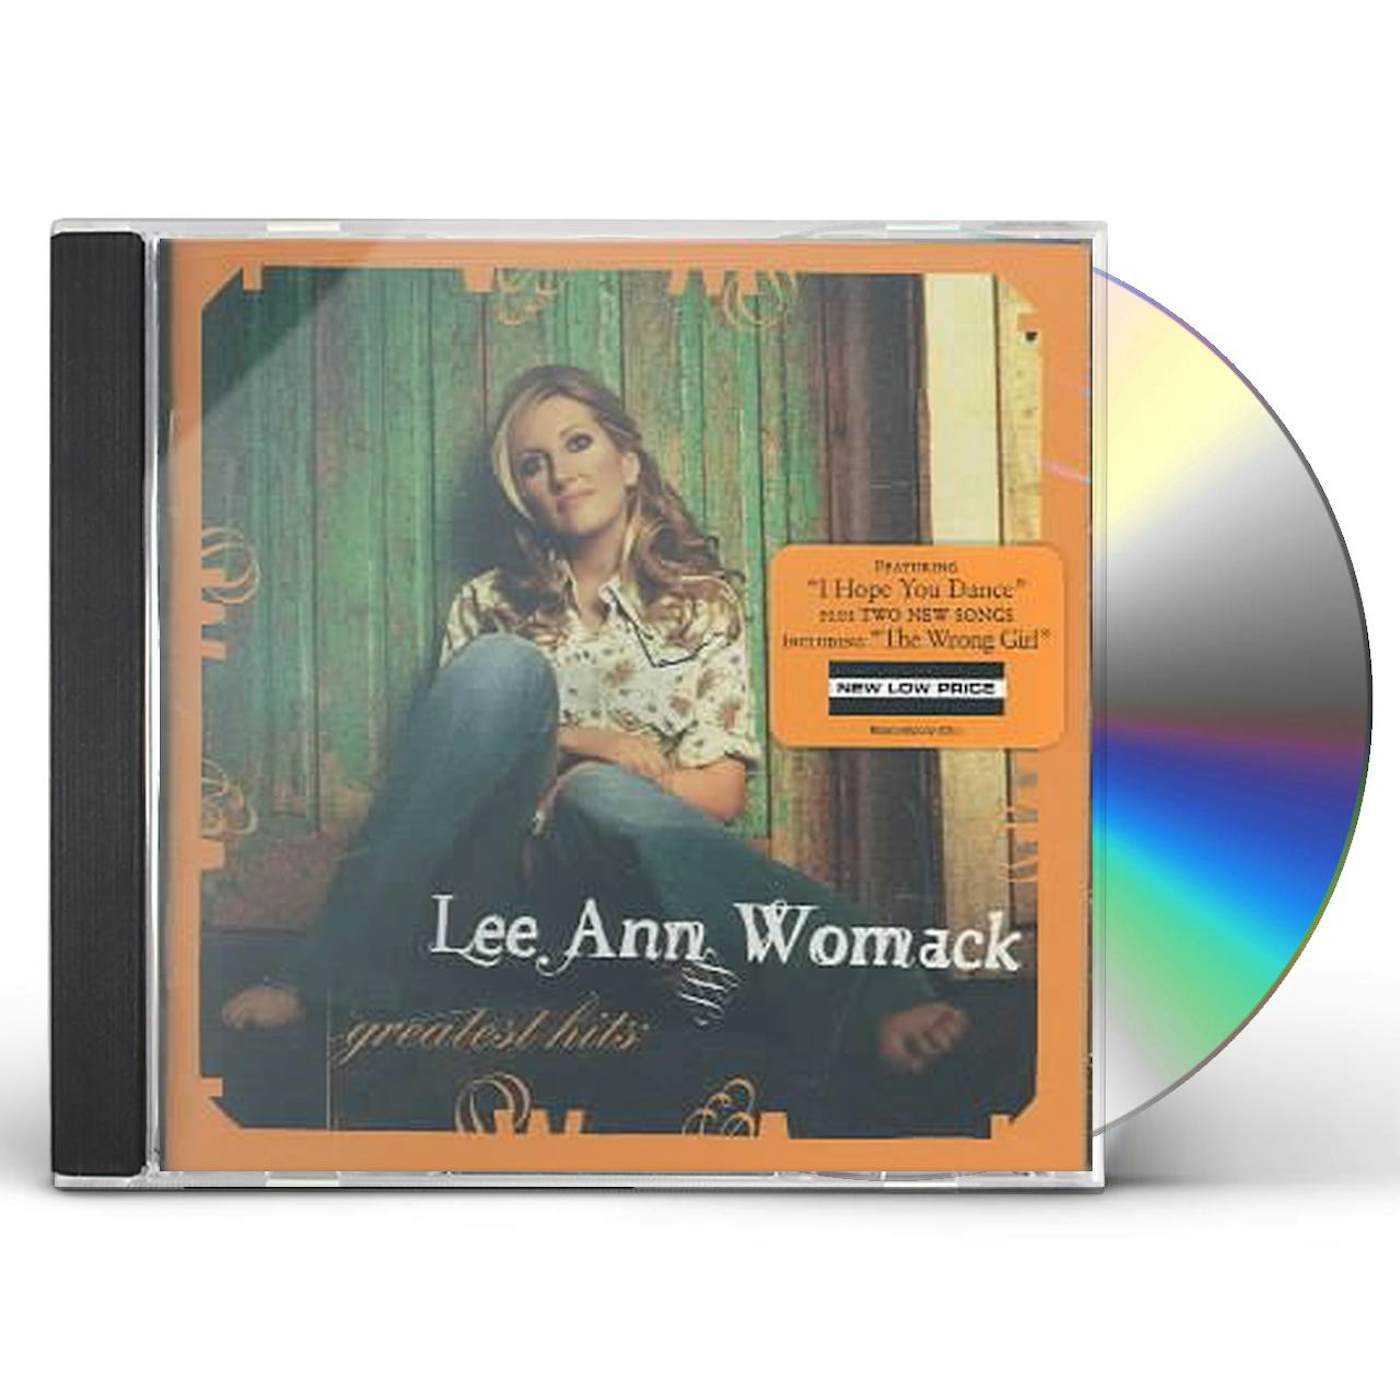 Lee Ann Womack GREATEST HITS CD